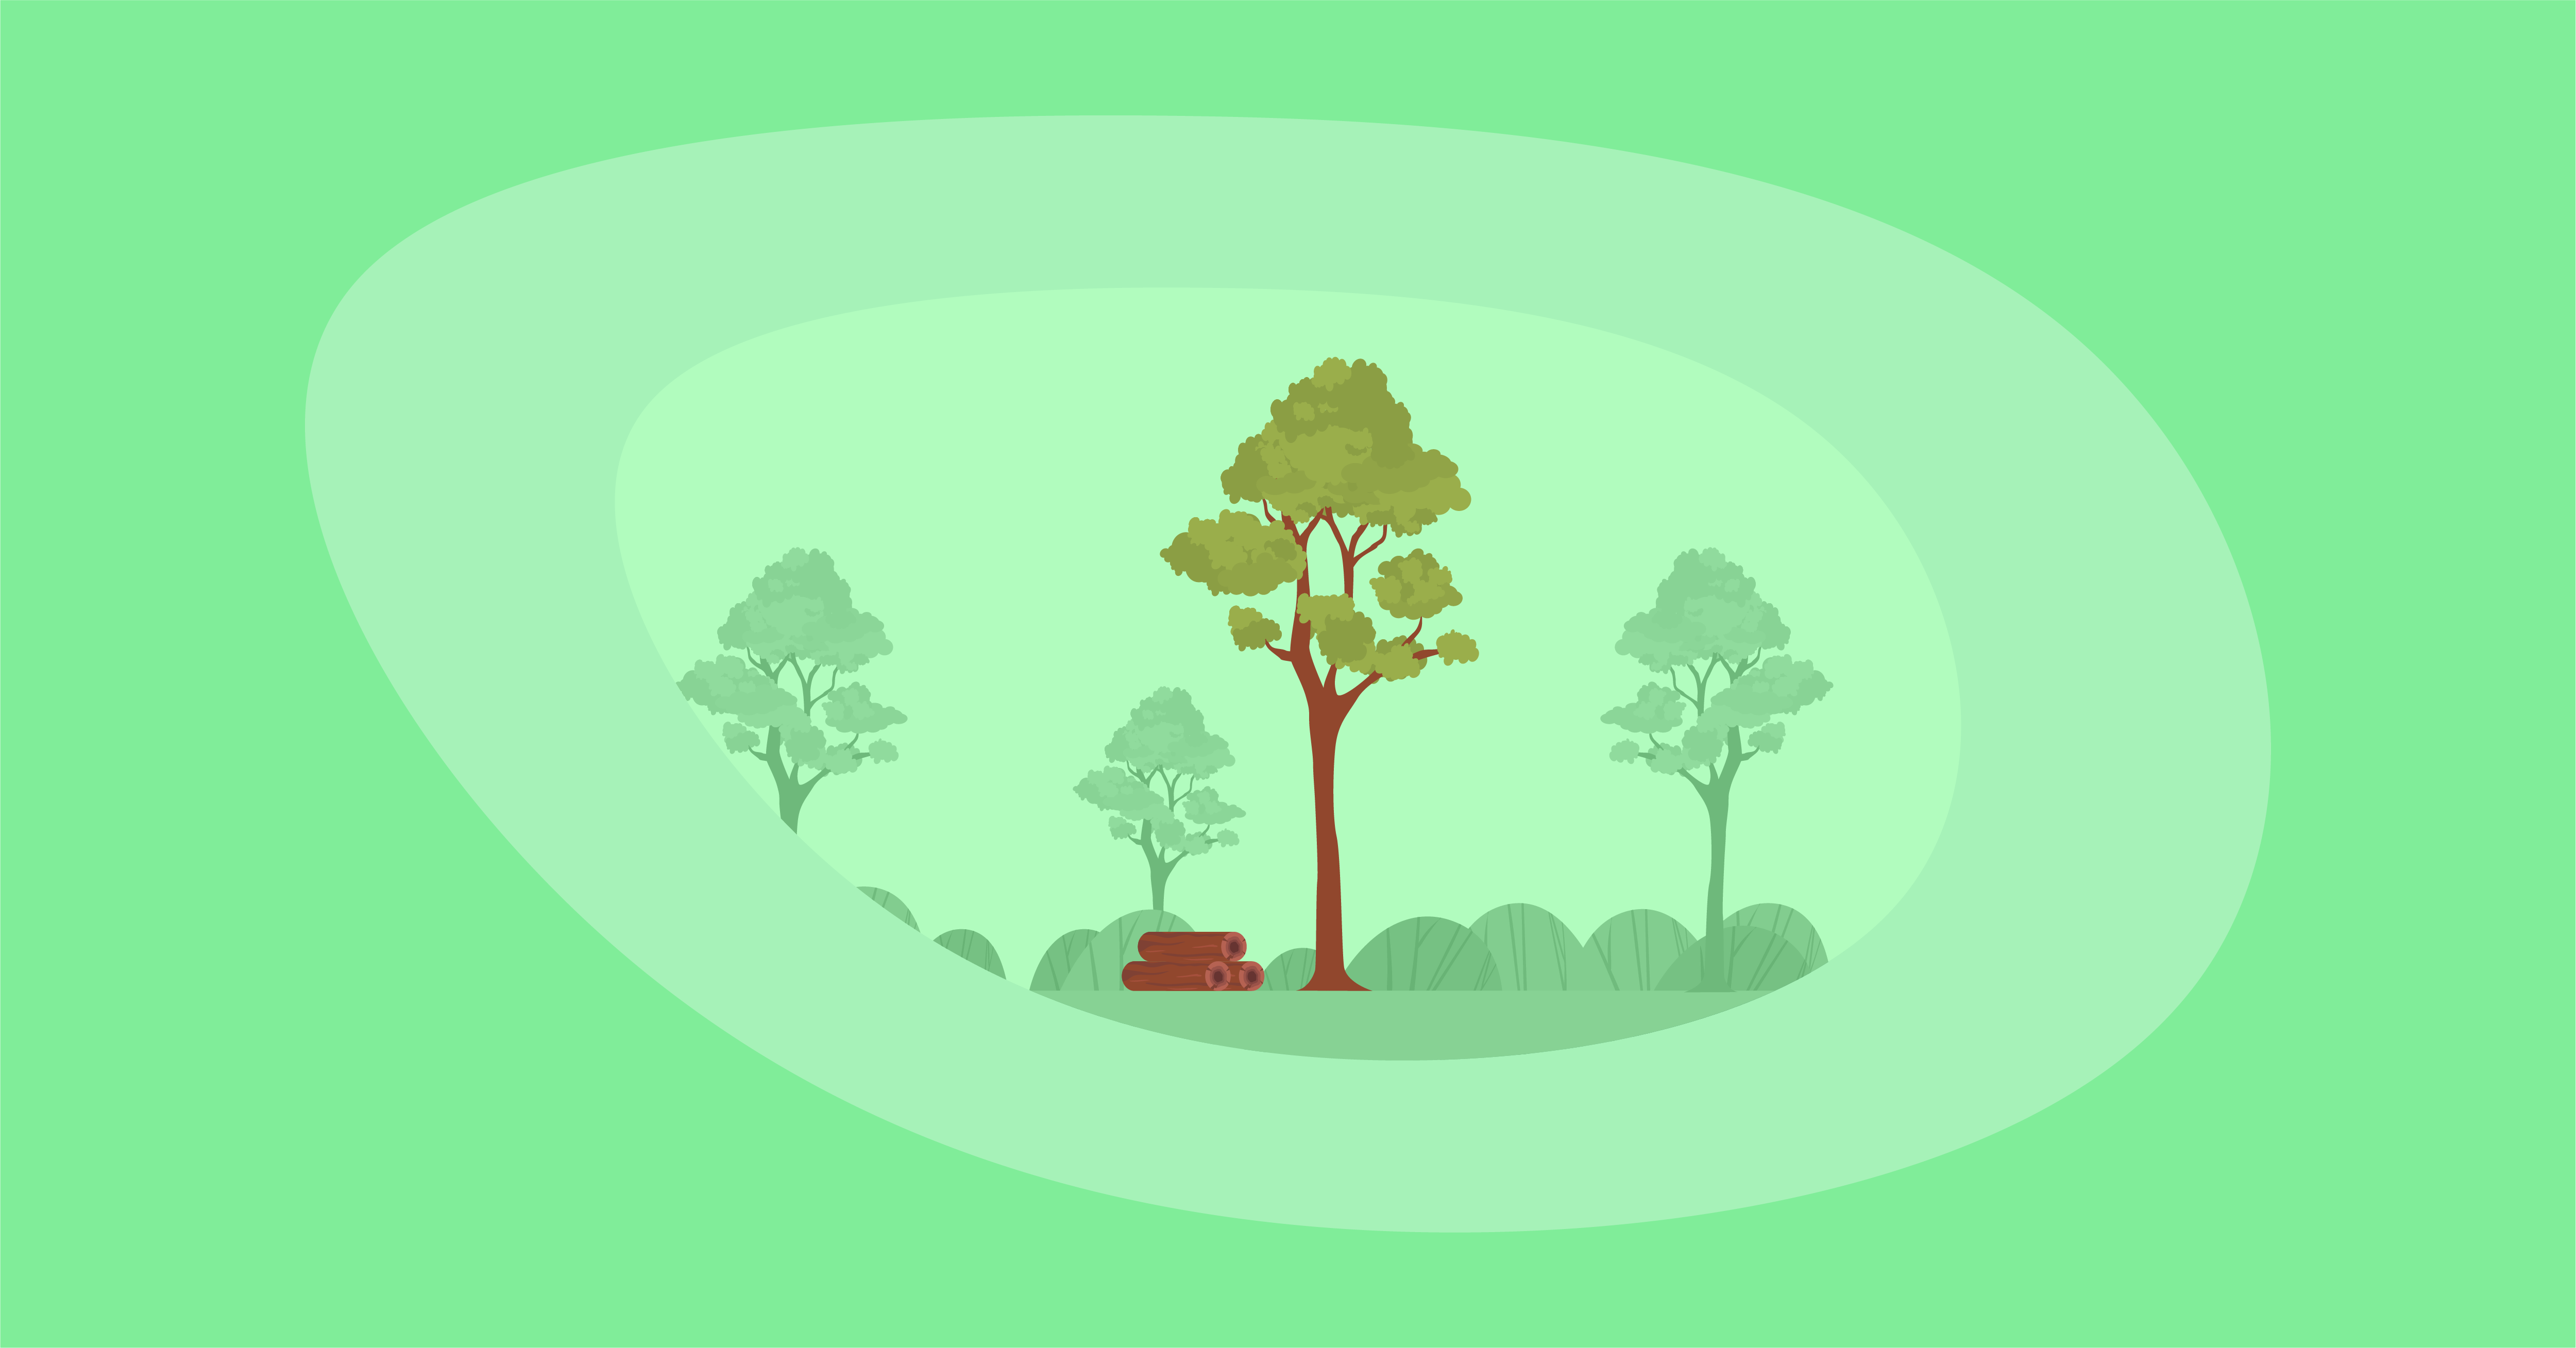 Illustration of a balau tree and wood